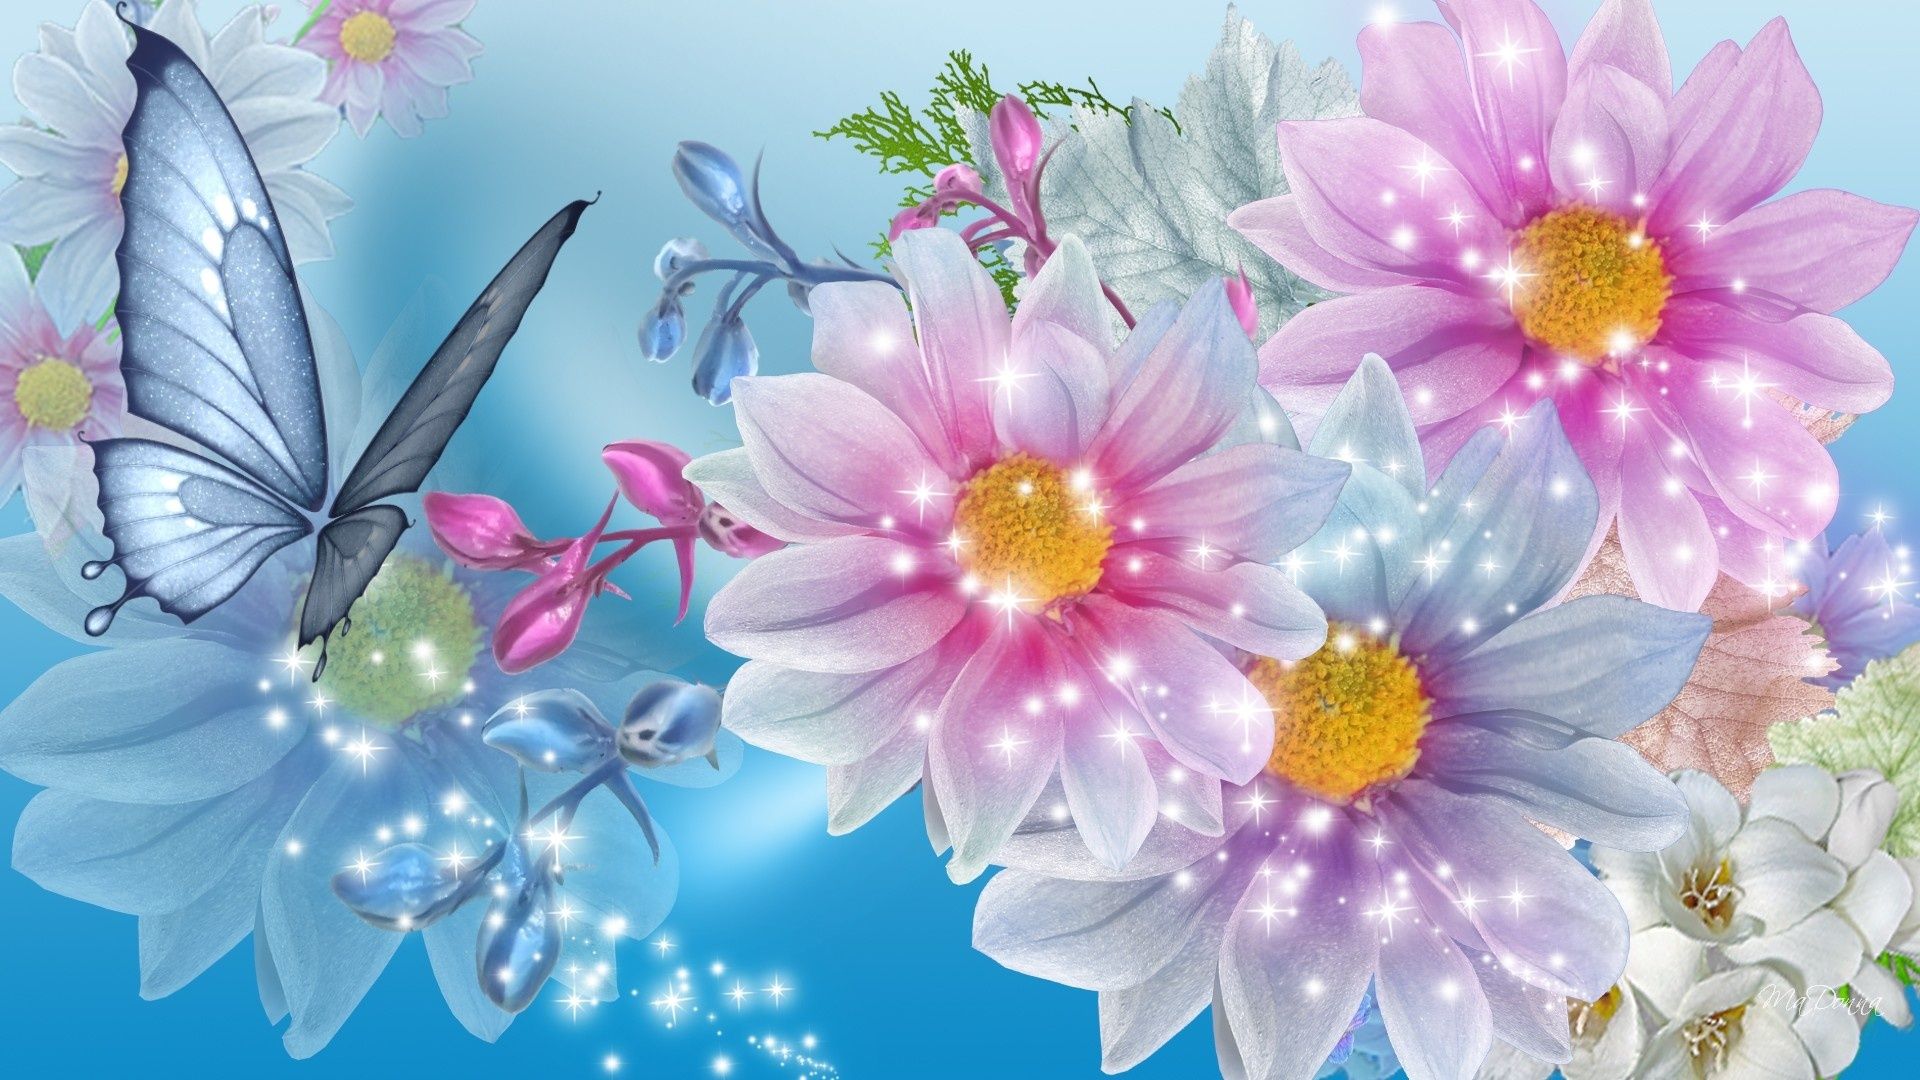 Beautiful Flower Wallpaper Free To Download. Flower wallpaper